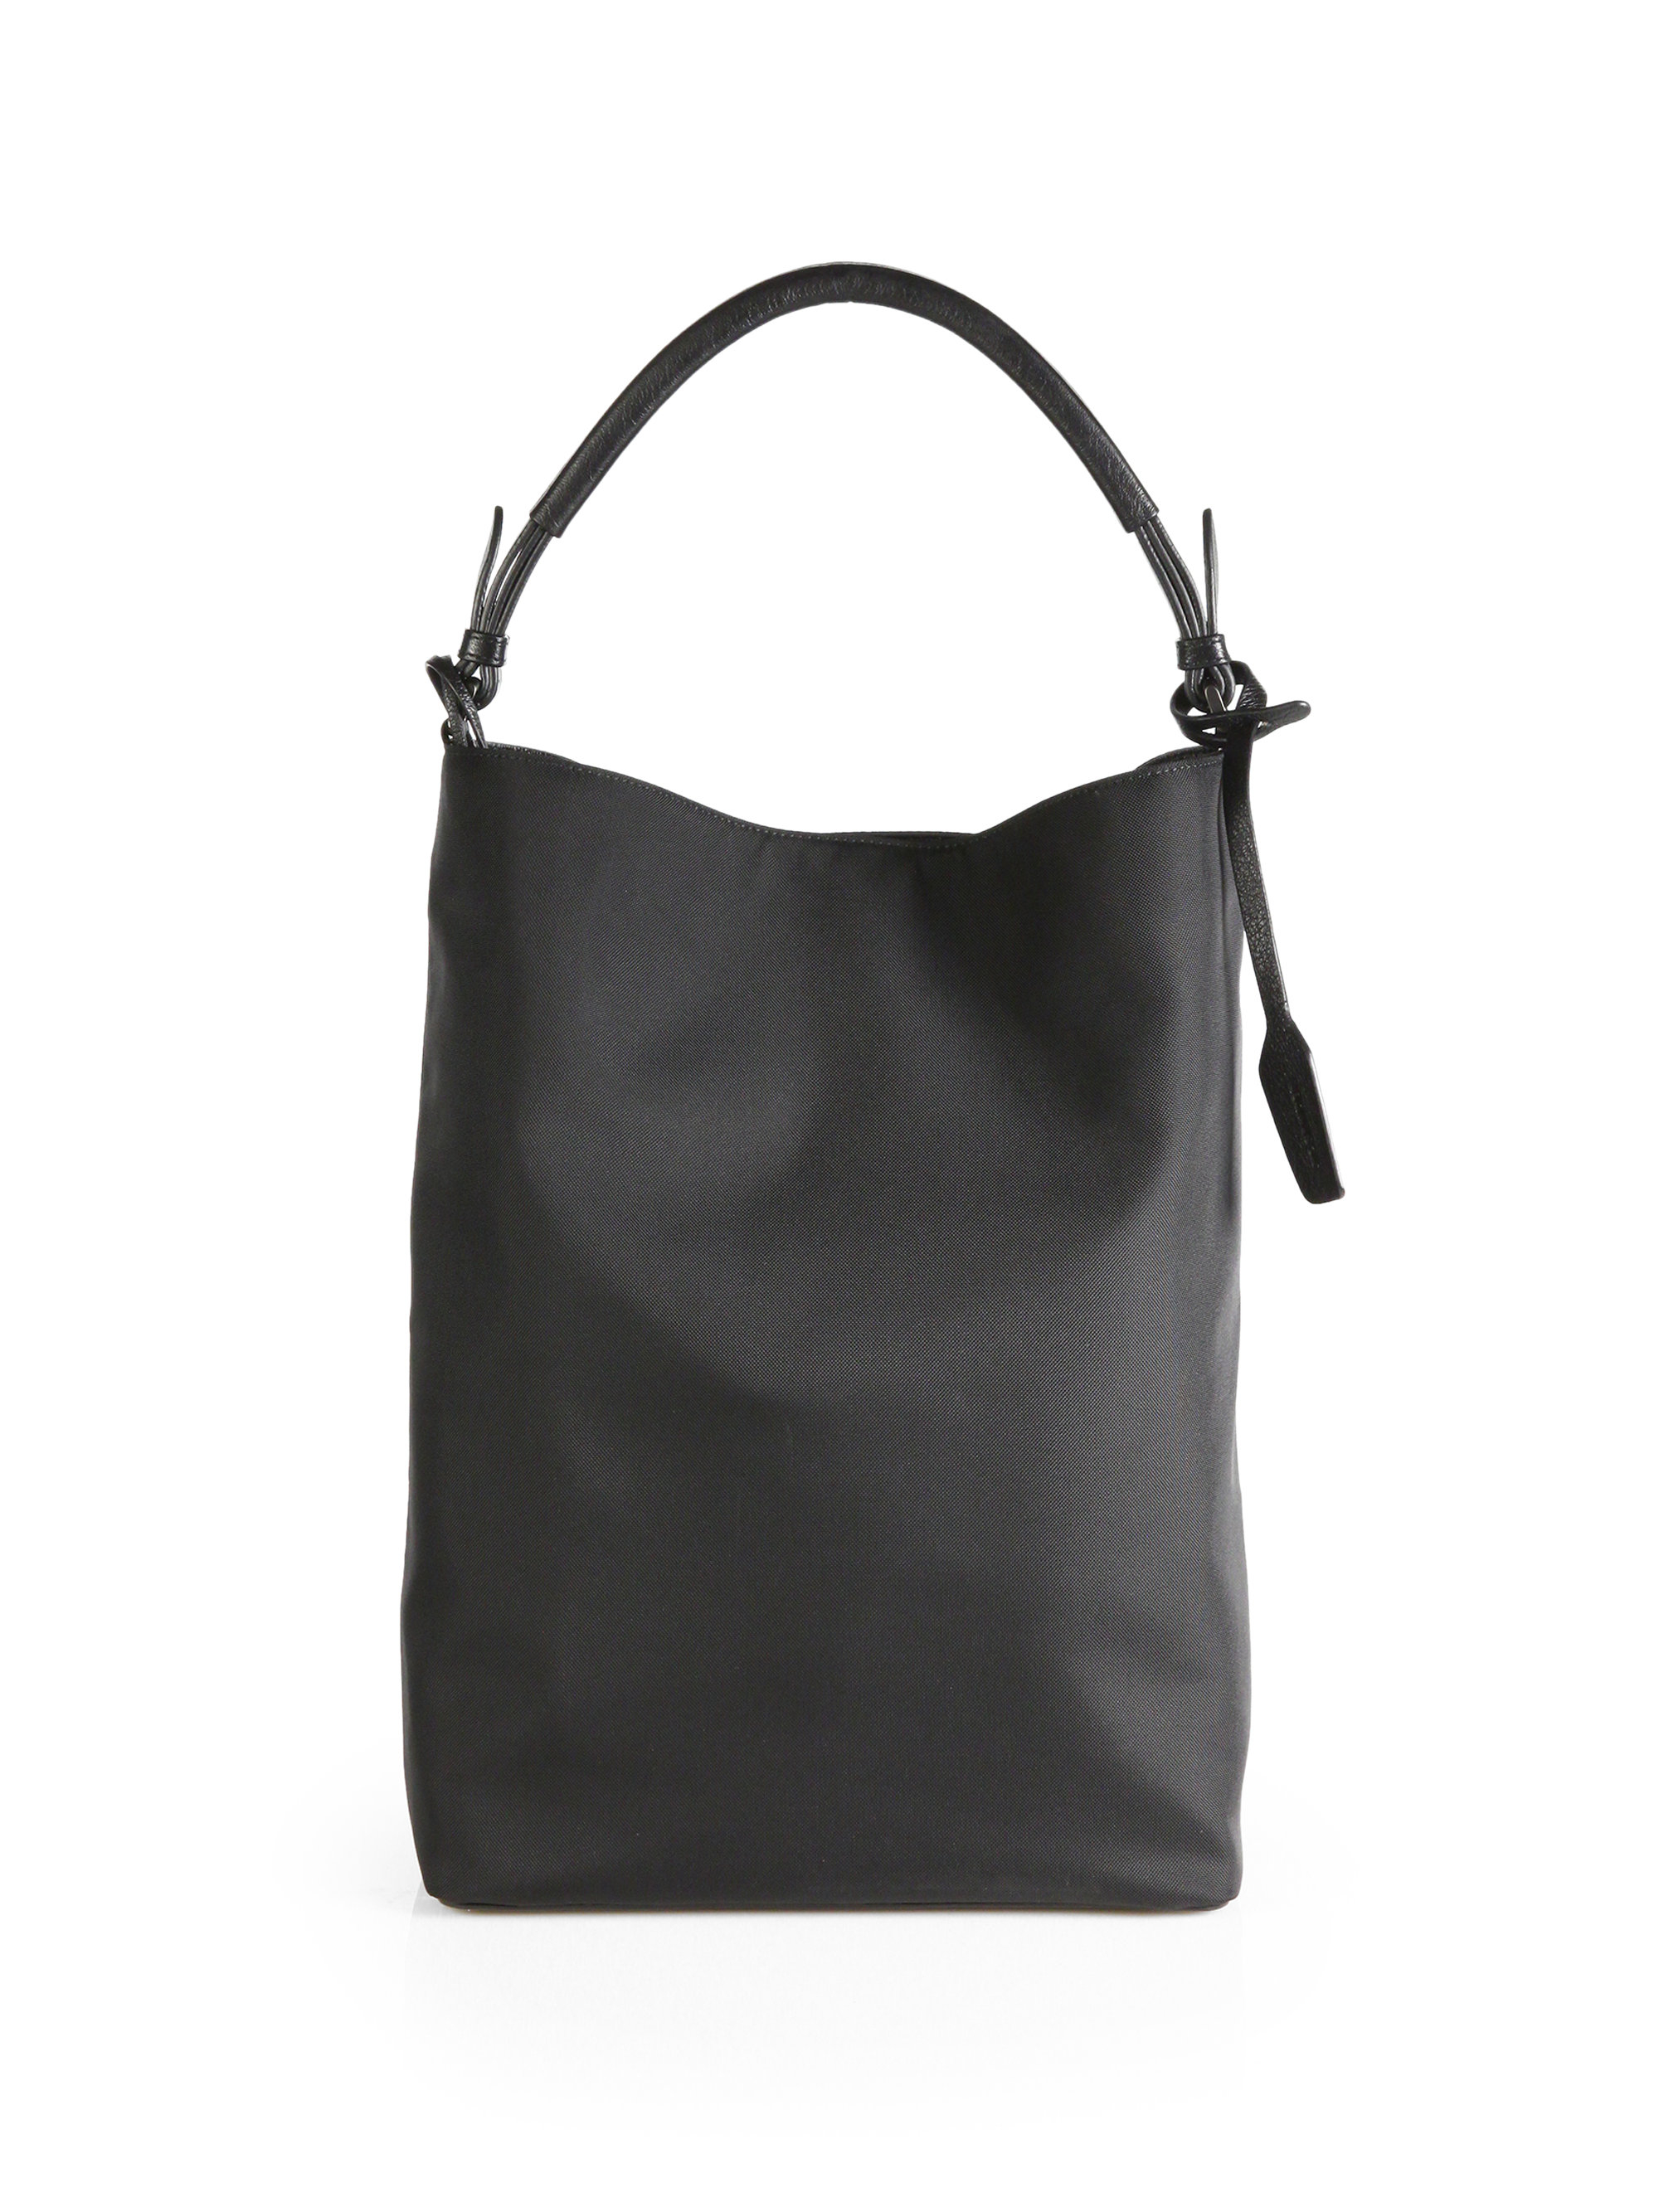 Lyst - Jil Sander Large Nylon Hobo Bag in Black